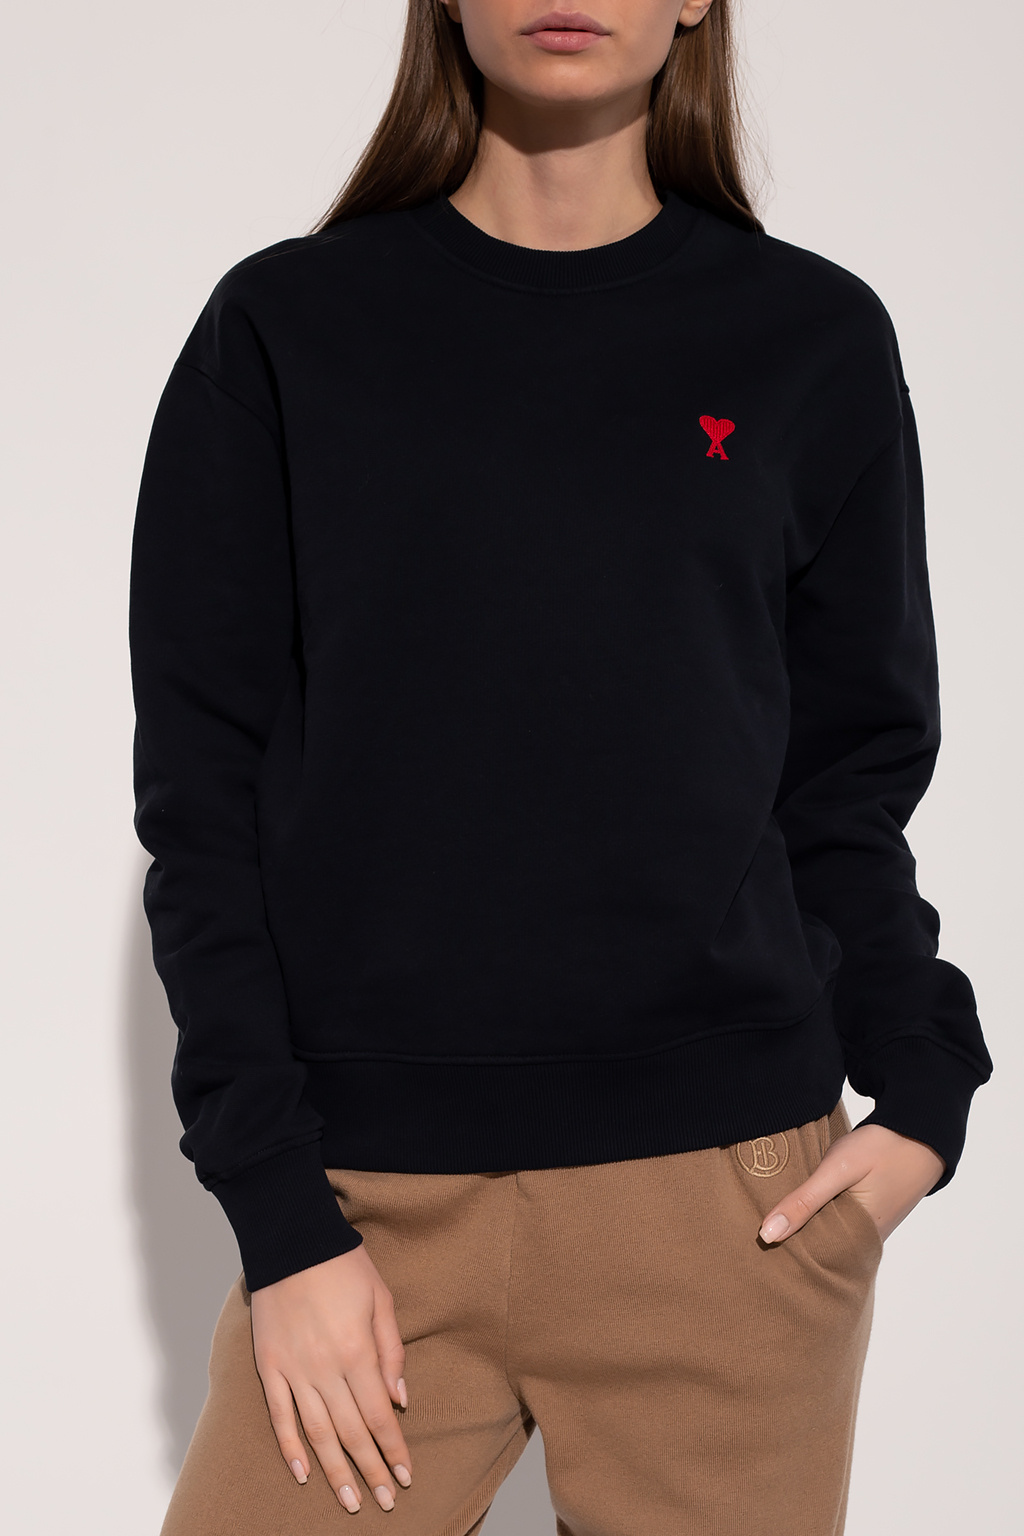 Ami Alexandre Mattiussi Cotton sweatshirt with logo